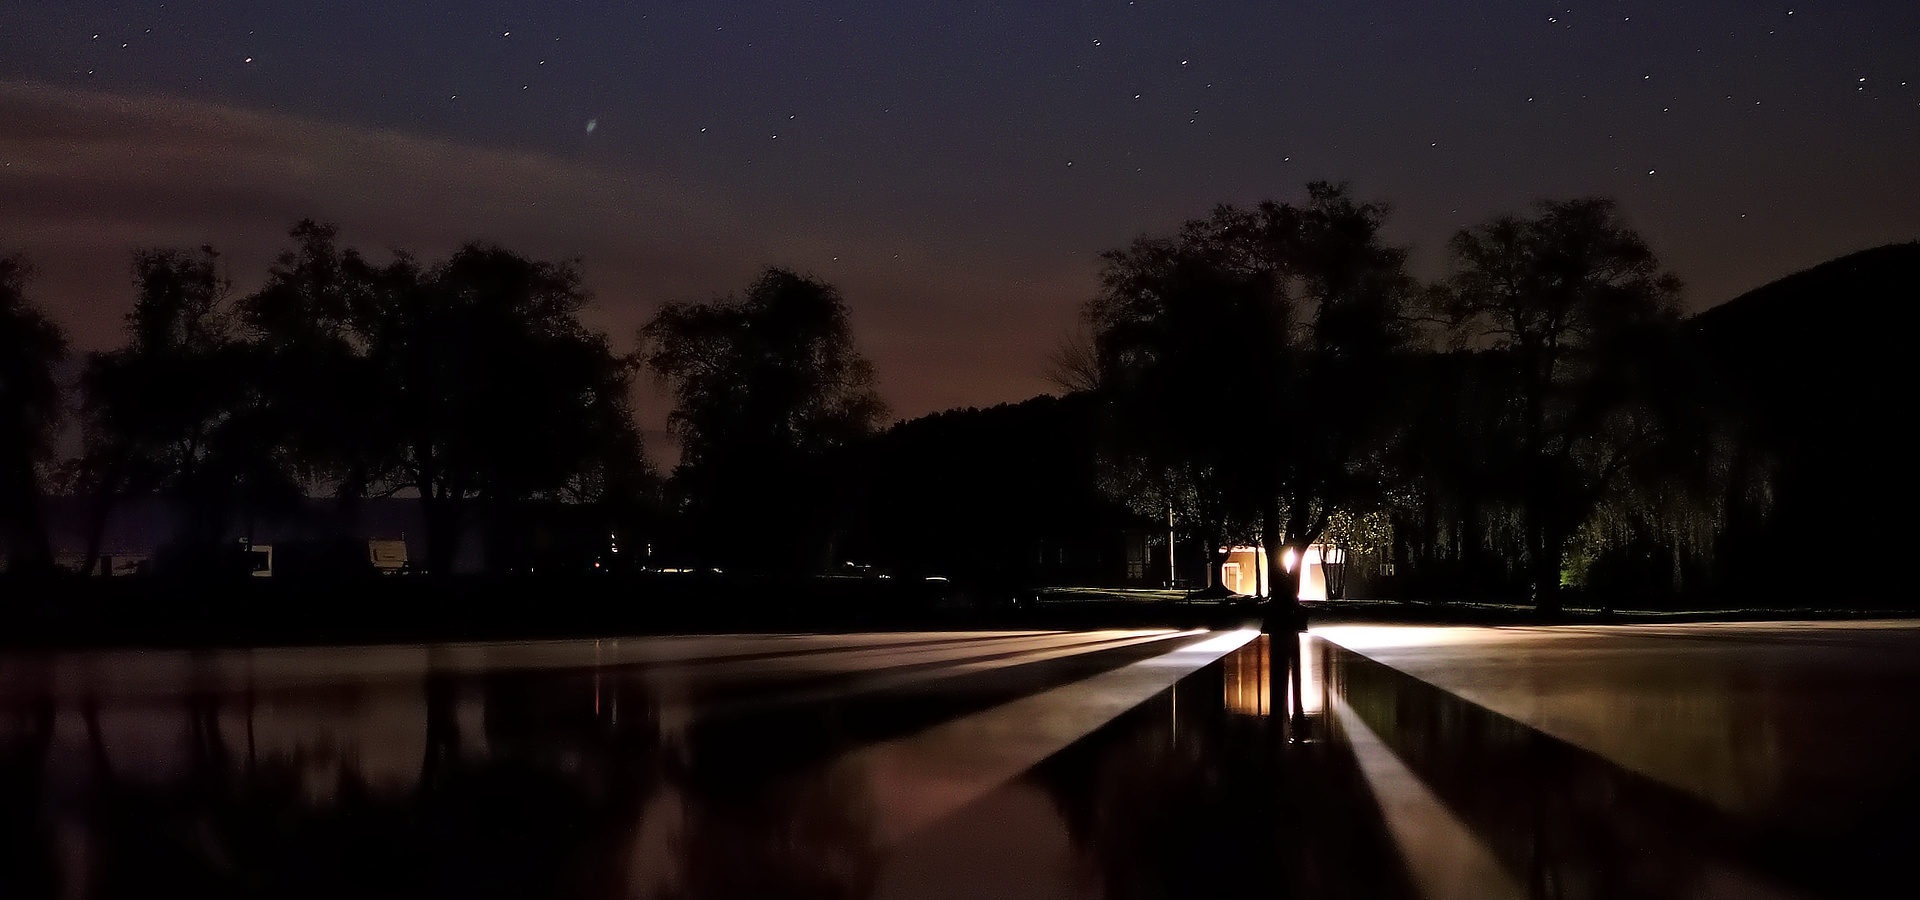 Lights over the pond